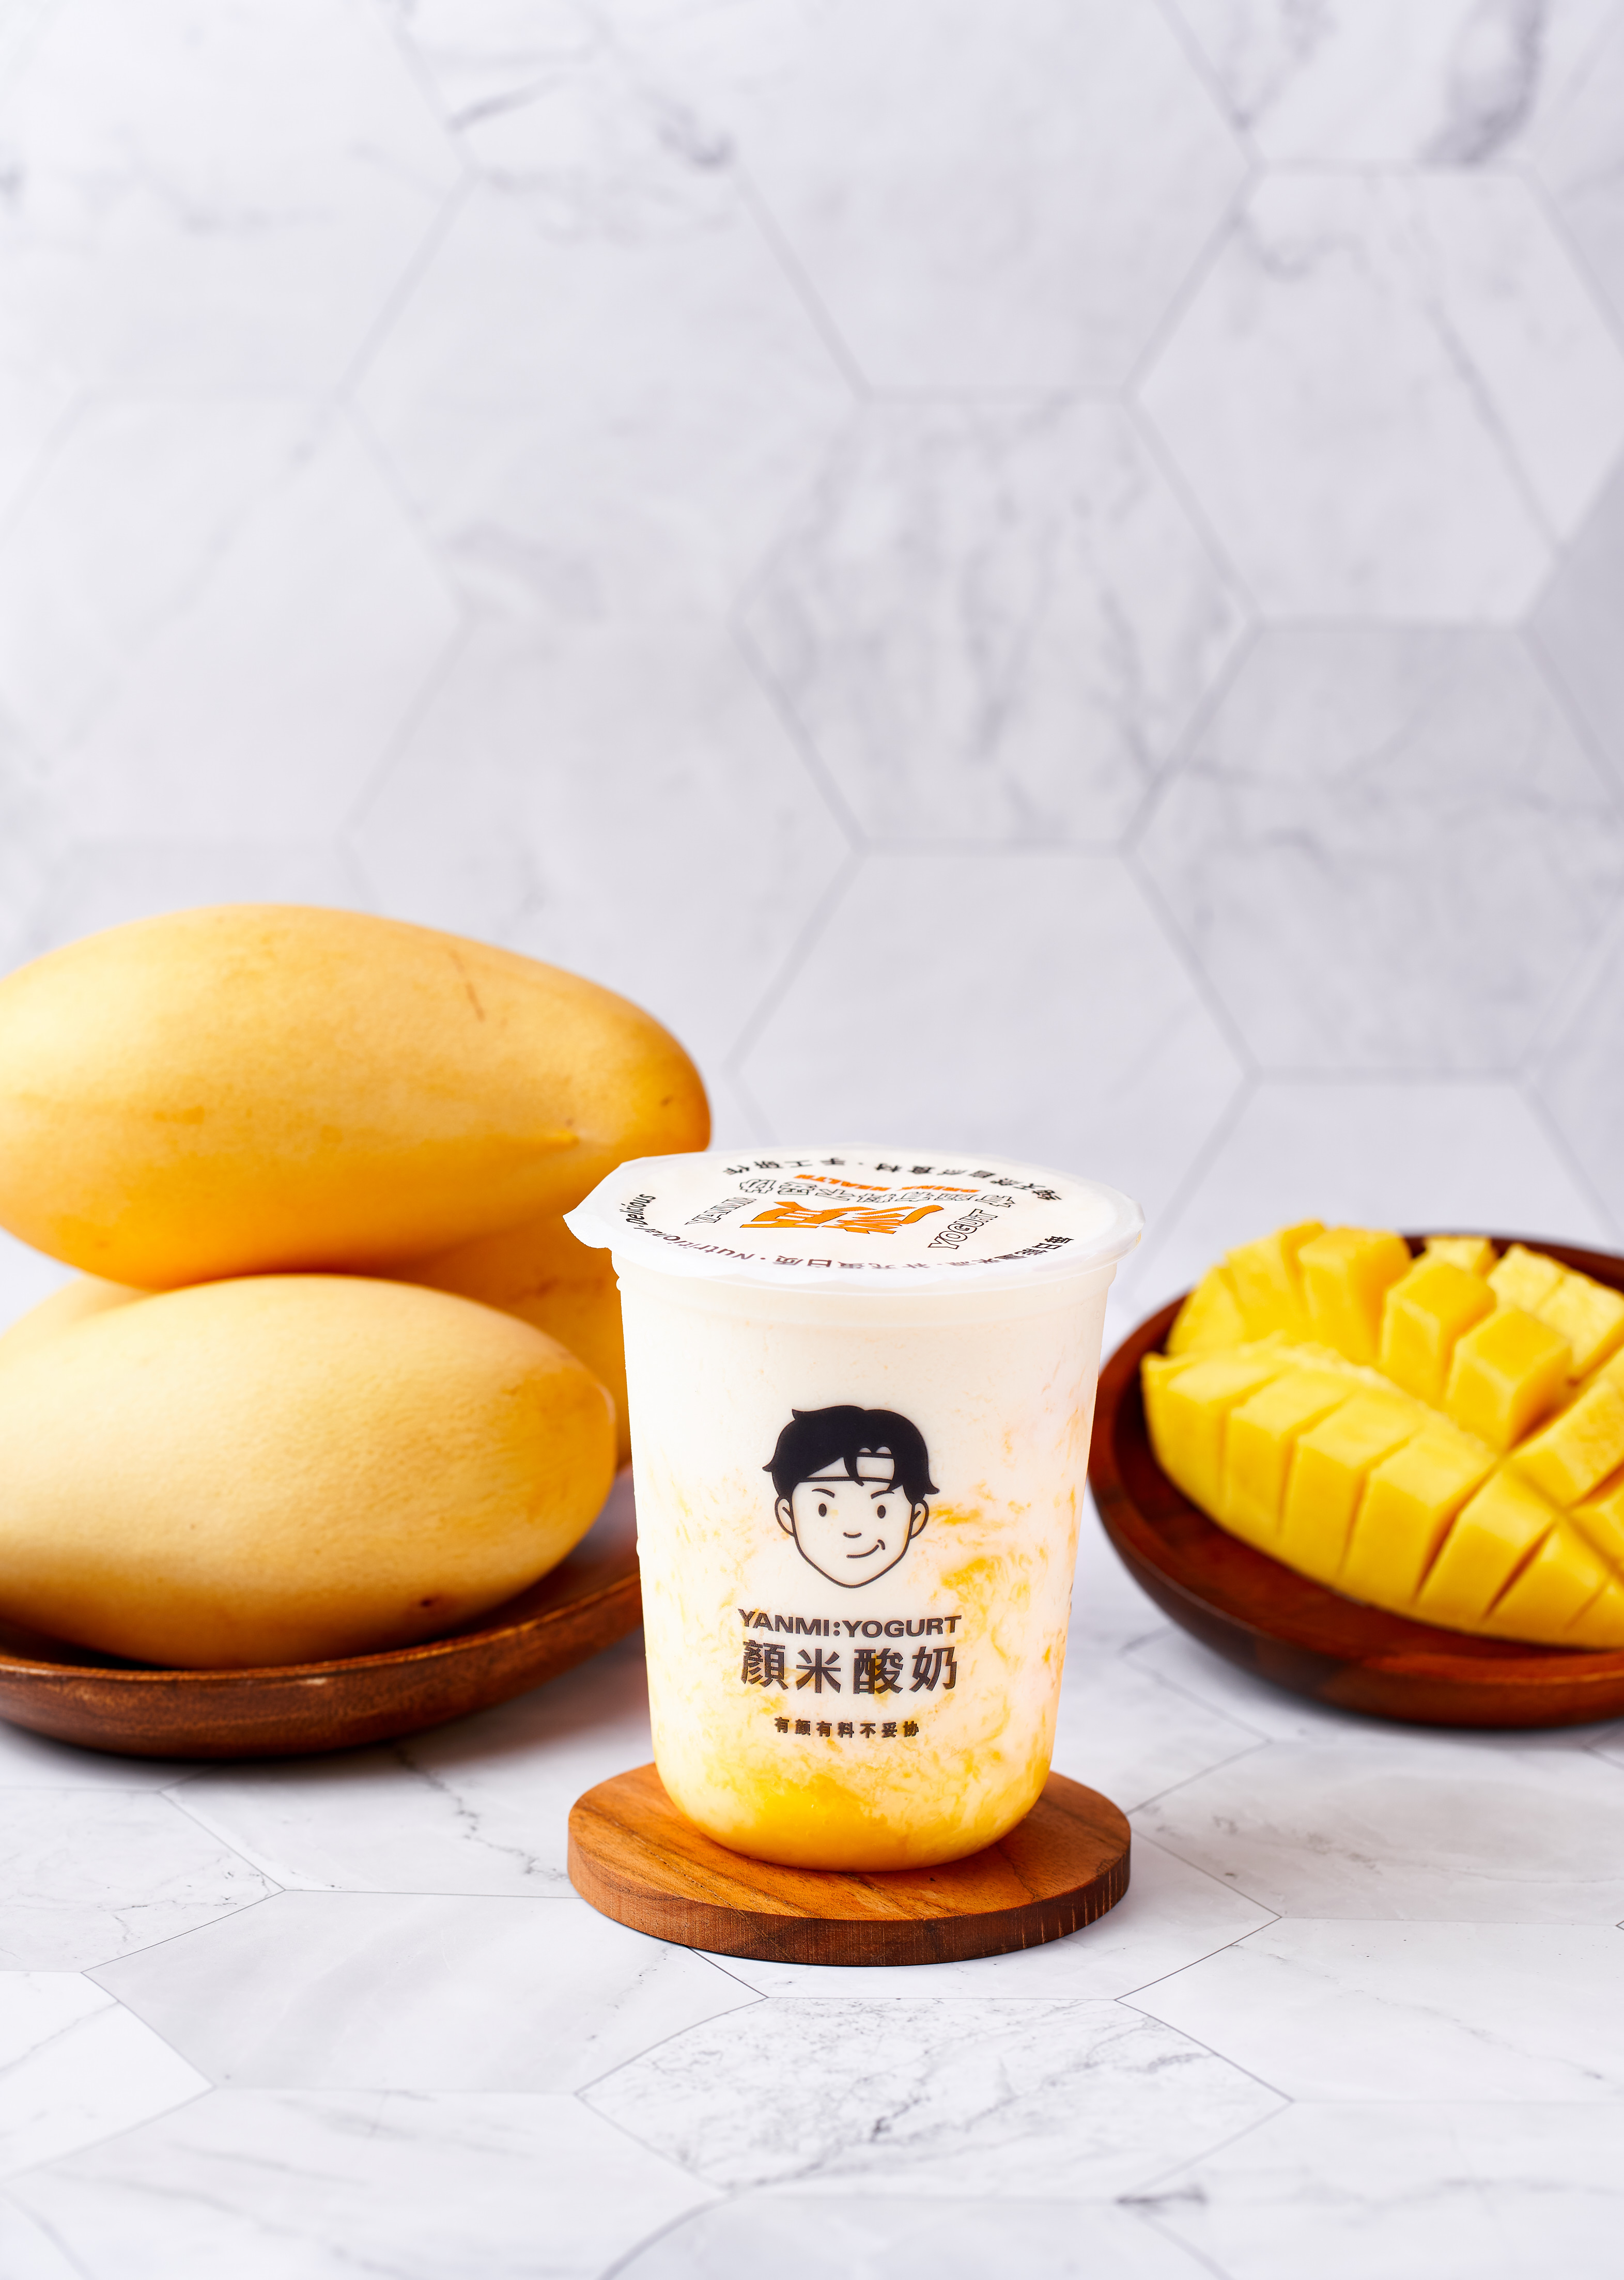 Popular yogurt drink store, Yanmi Yogurt (颜米酸奶), to offer 1-for-1 yogurt drinks from 26 to 28 Oct 19 - 2